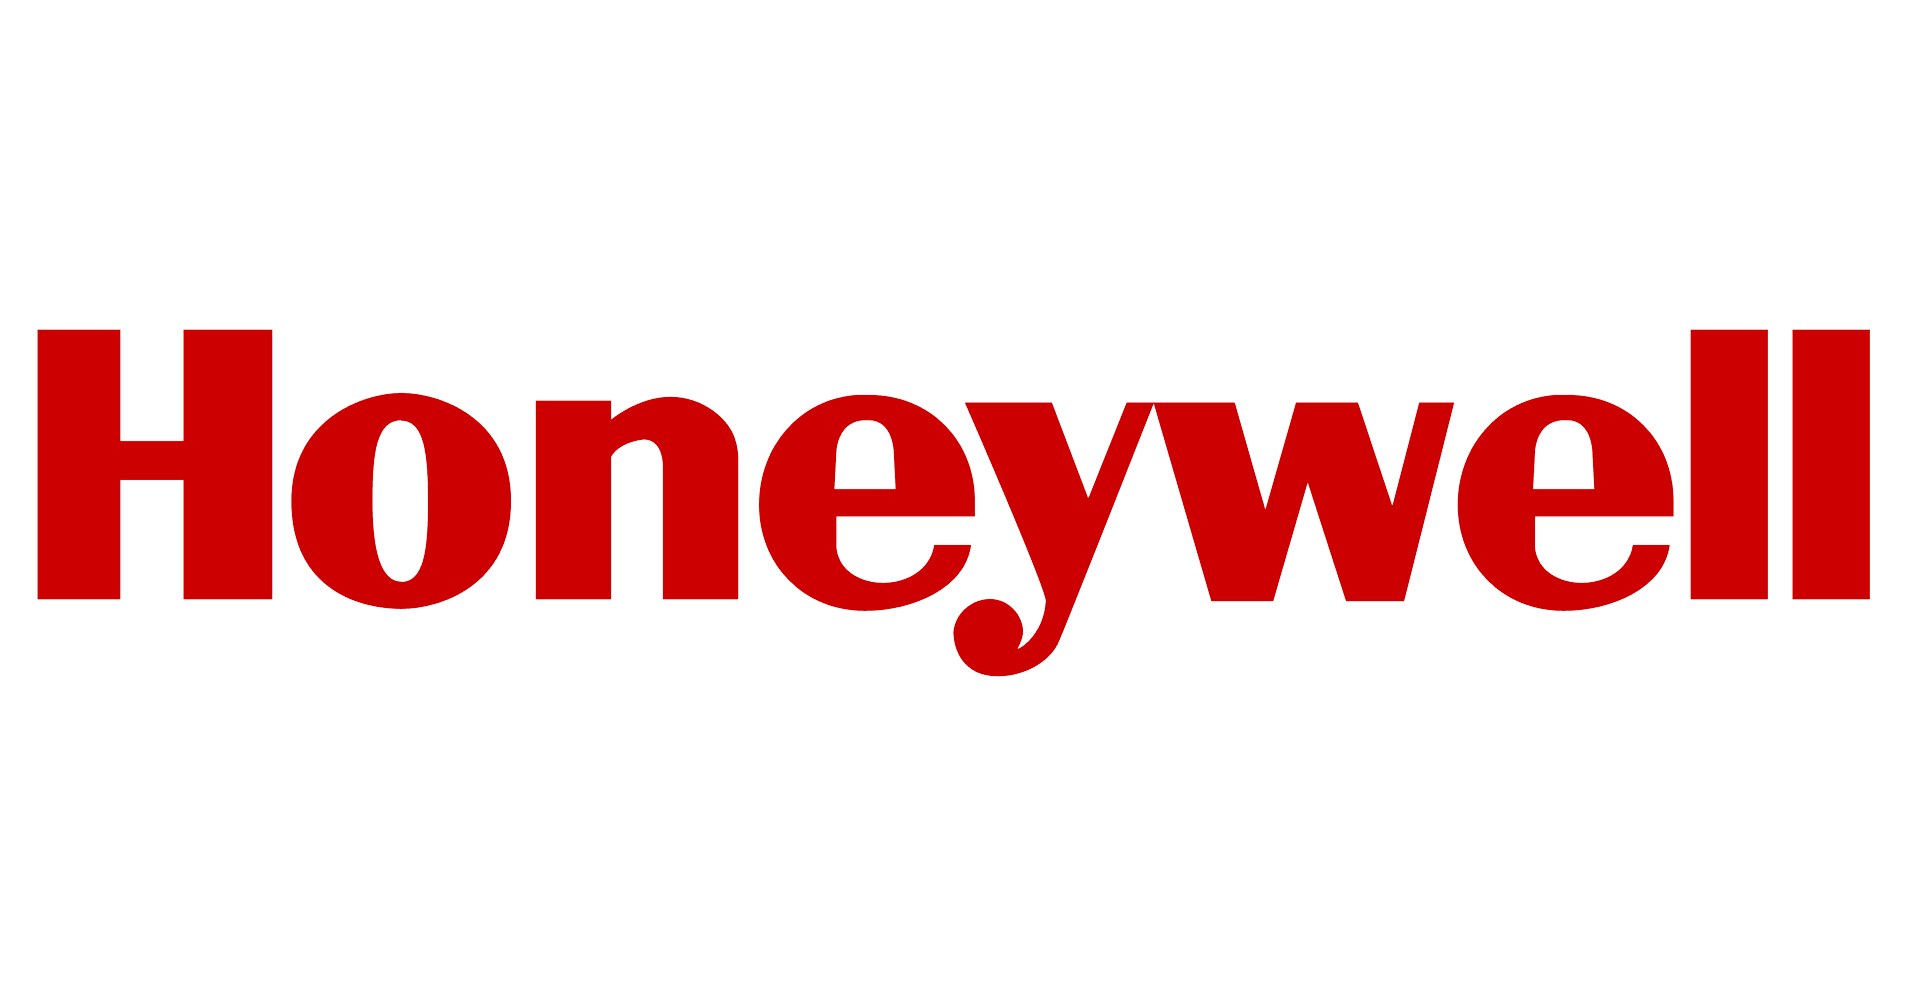 Honeywell hires ONU engineers